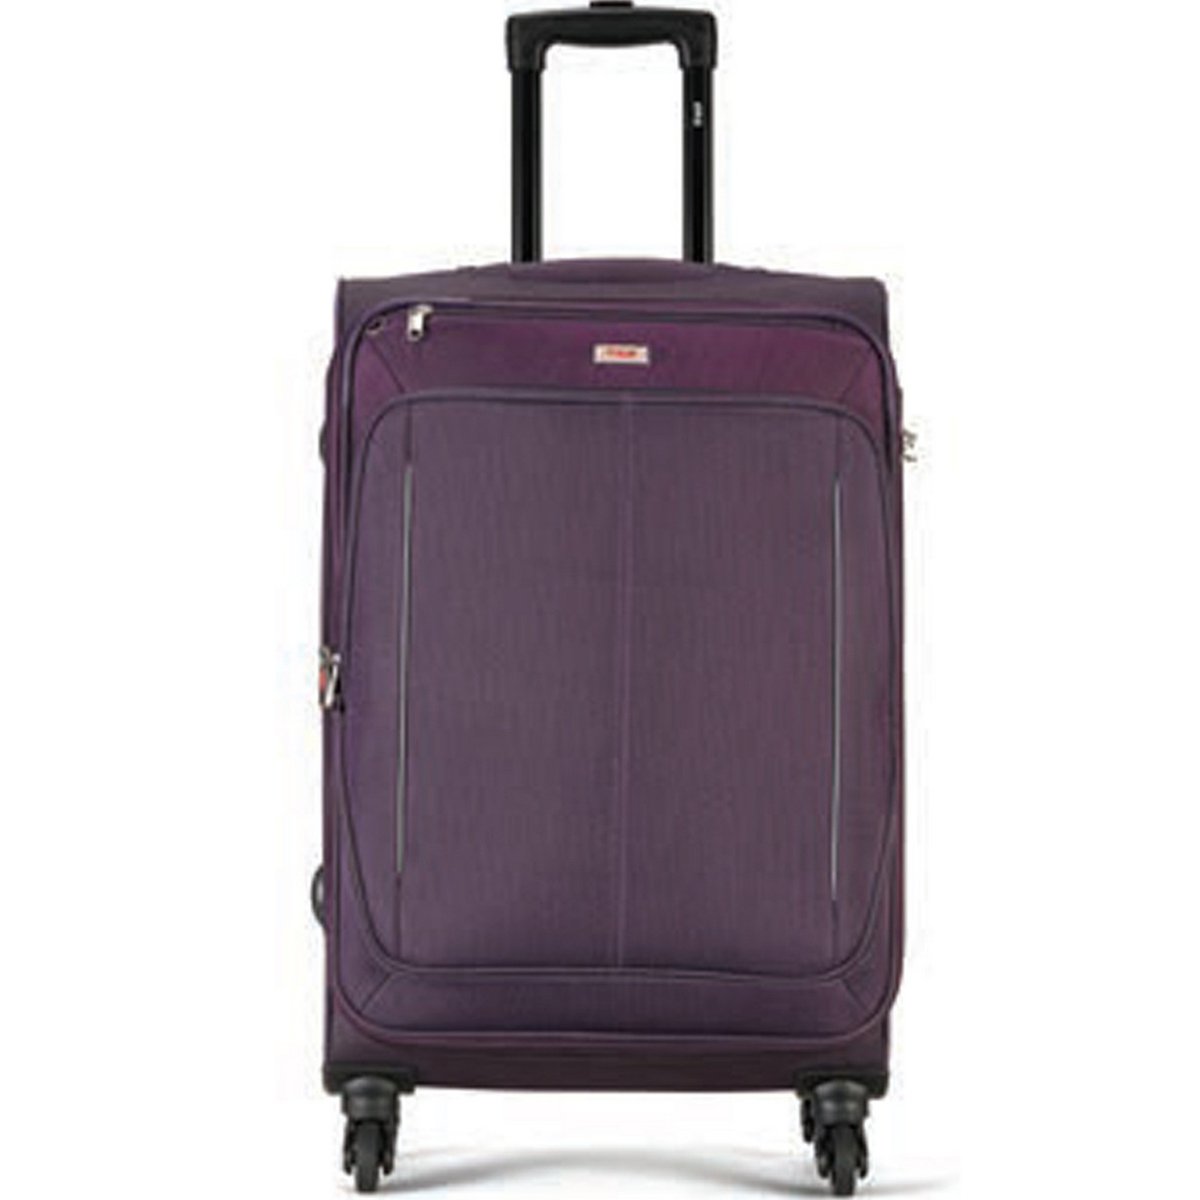 VIP Karizma 4 Wheel Soft Trolley, 79 cm, Purple